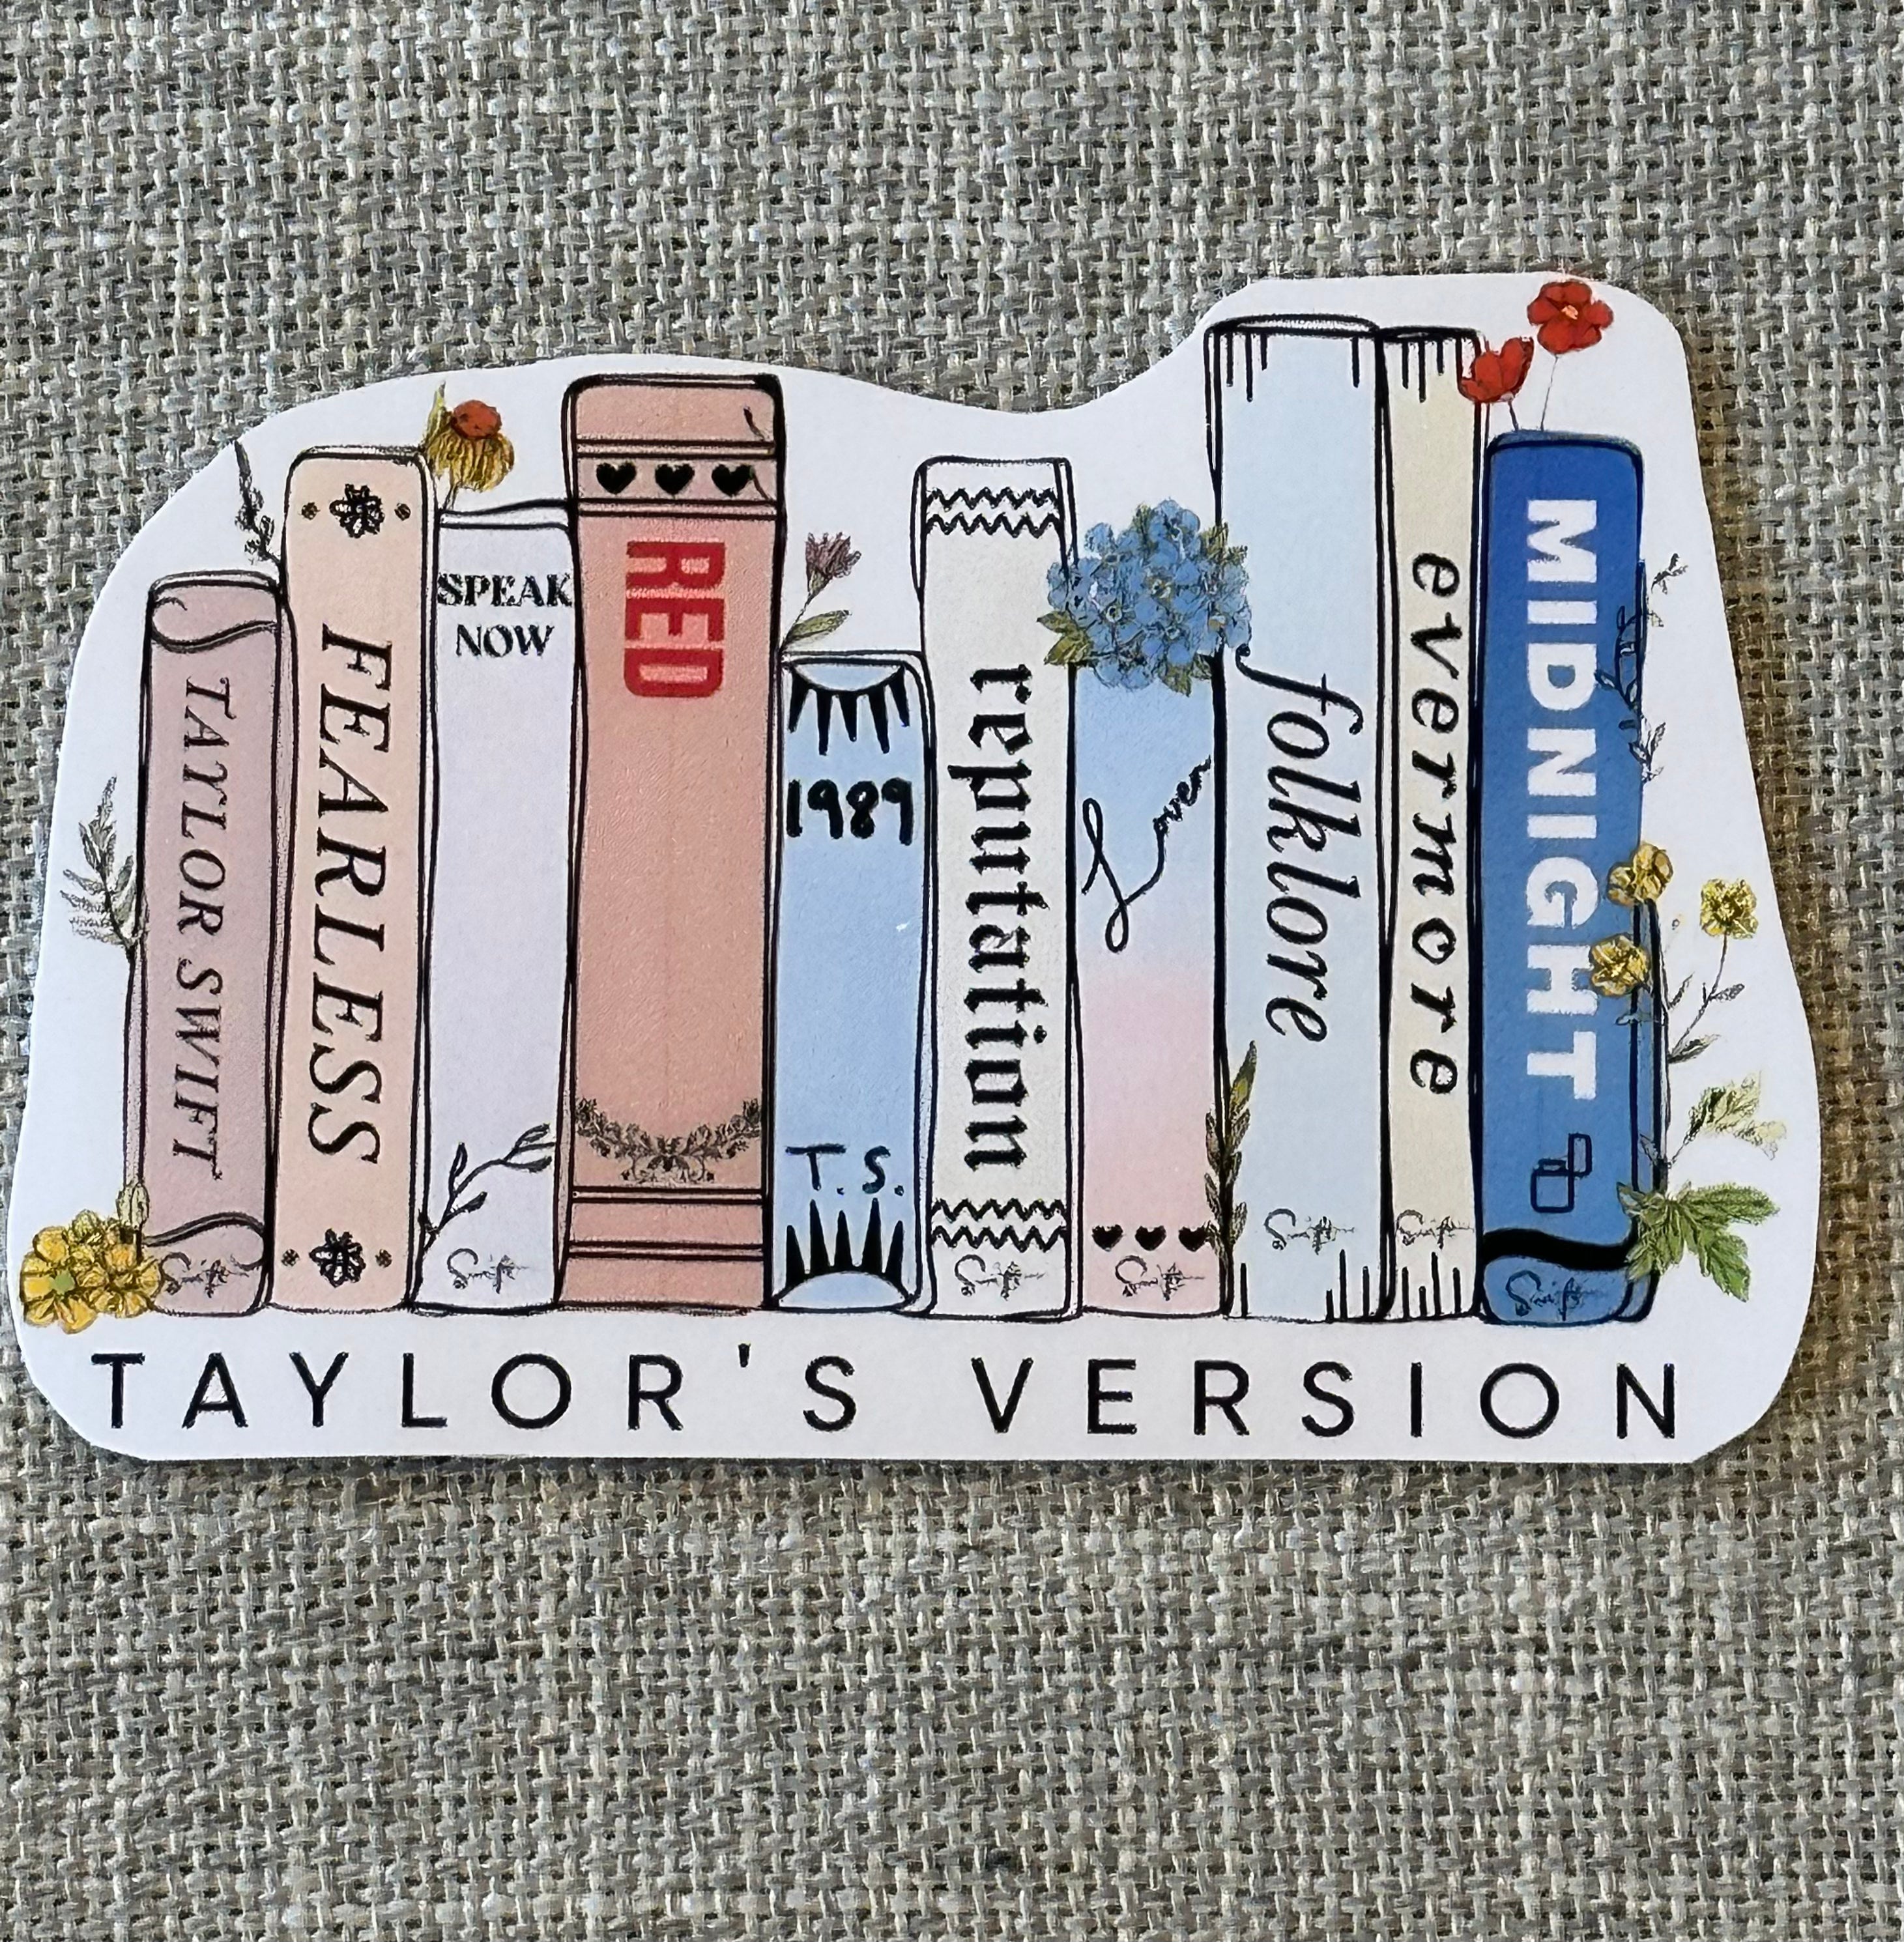 Folklore Stickers for Sale  Taylor swift lyrics, Taylor swift